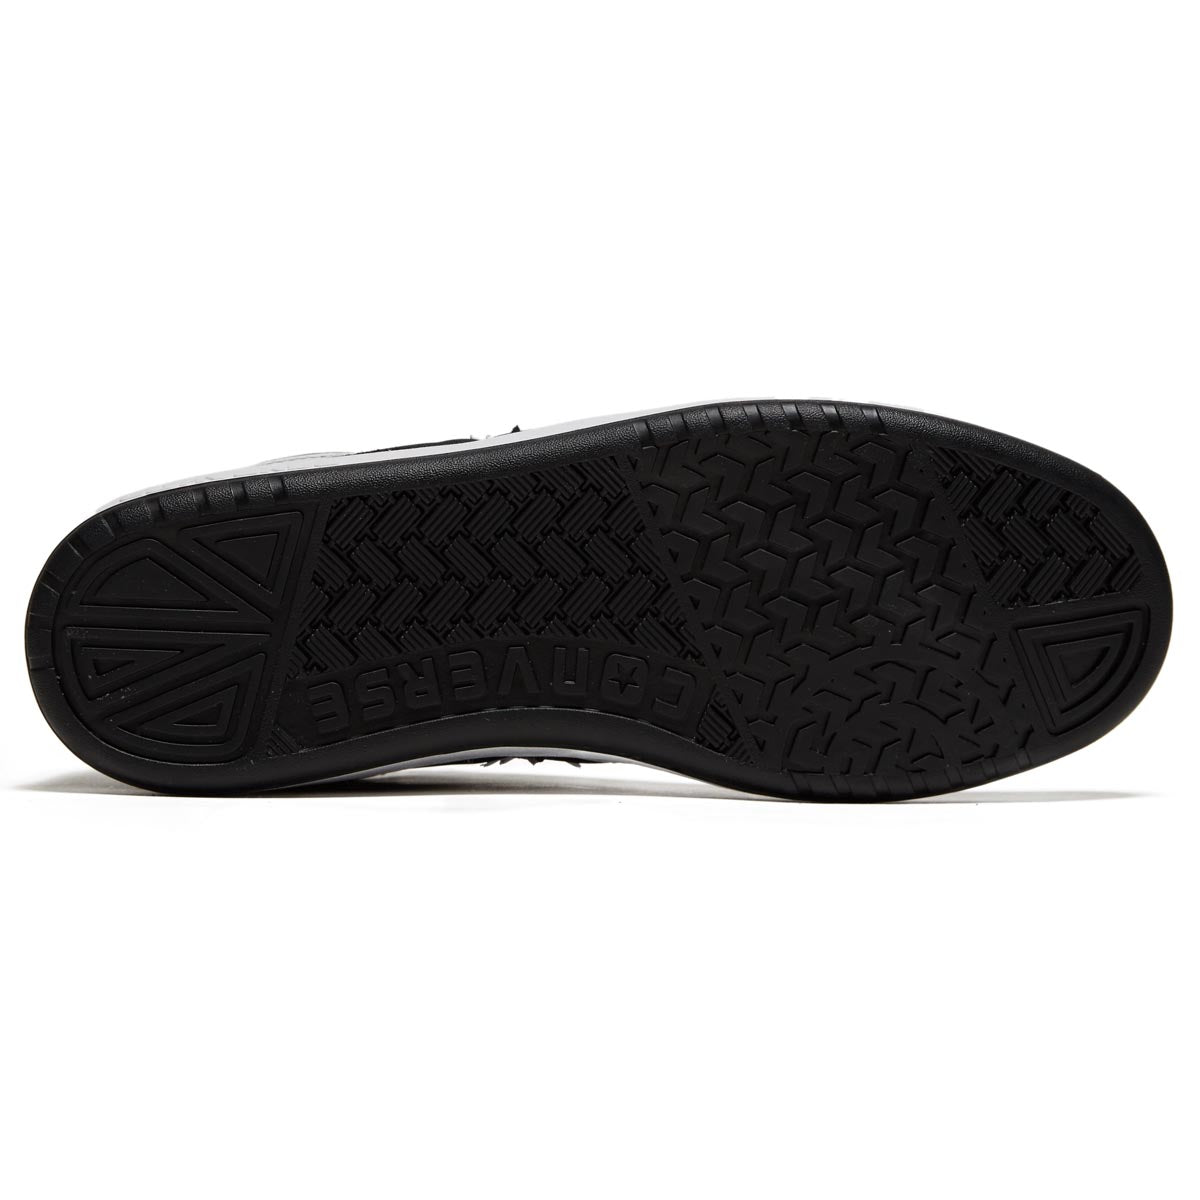 Converse Fastbreak Pro Mid Shoes - Black/White/Black image 4